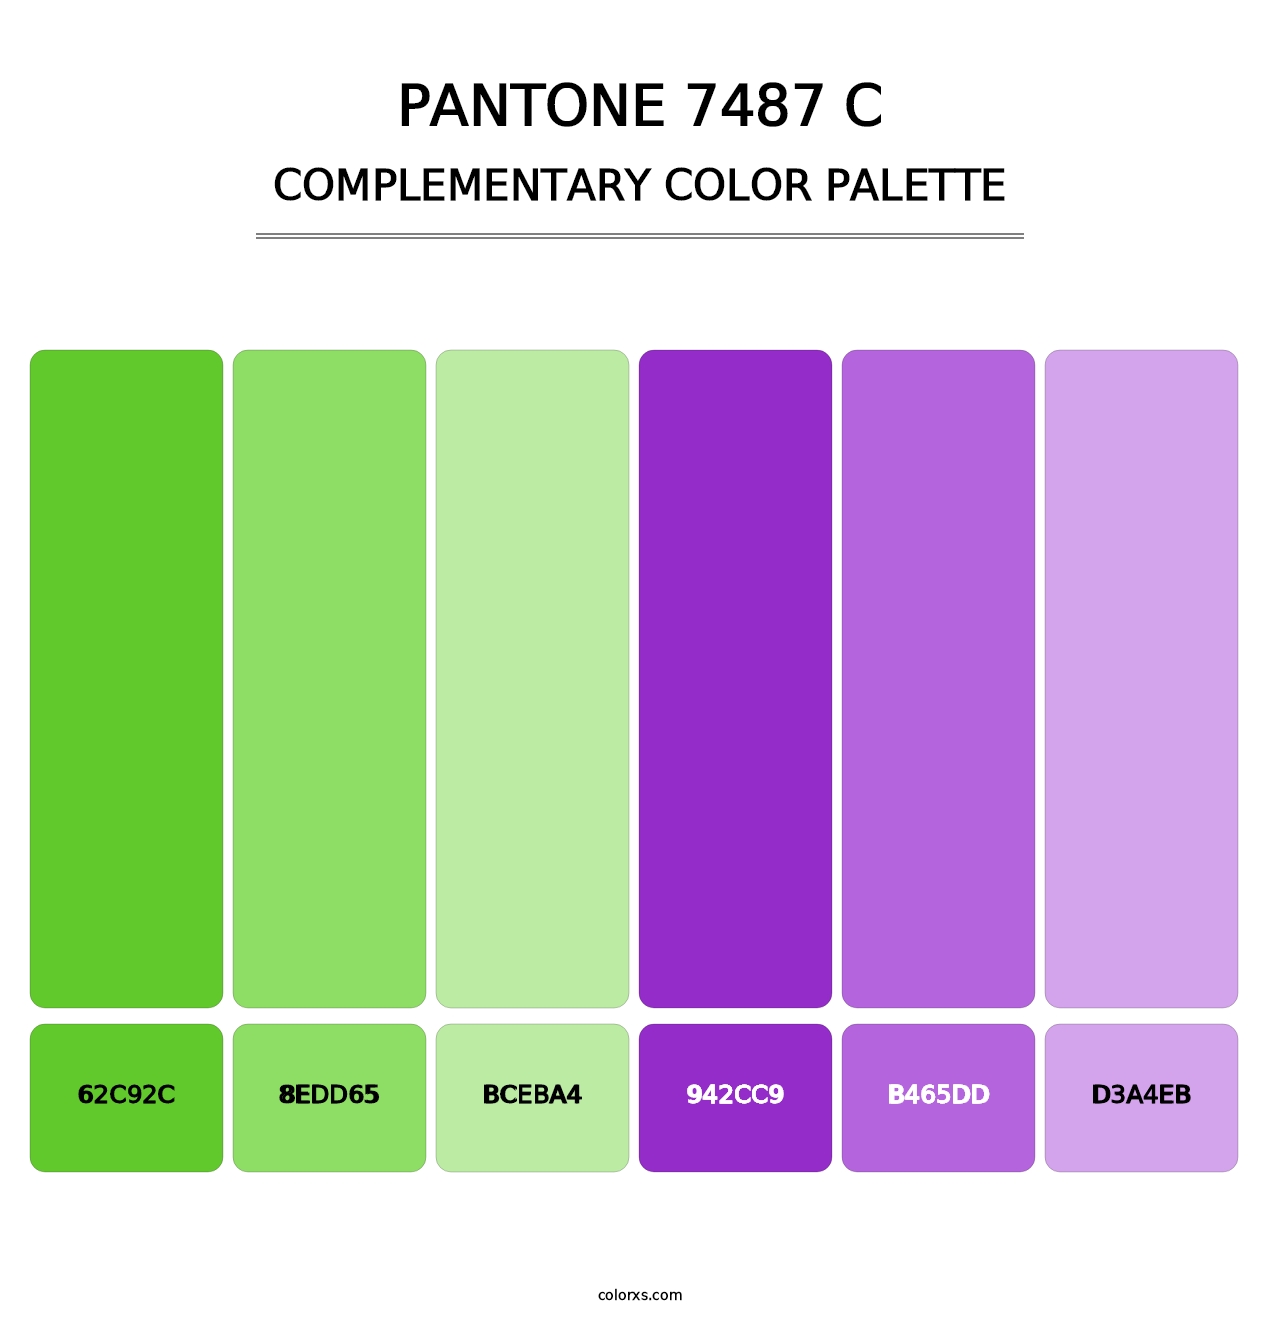 PANTONE 7487 C - Complementary Color Palette